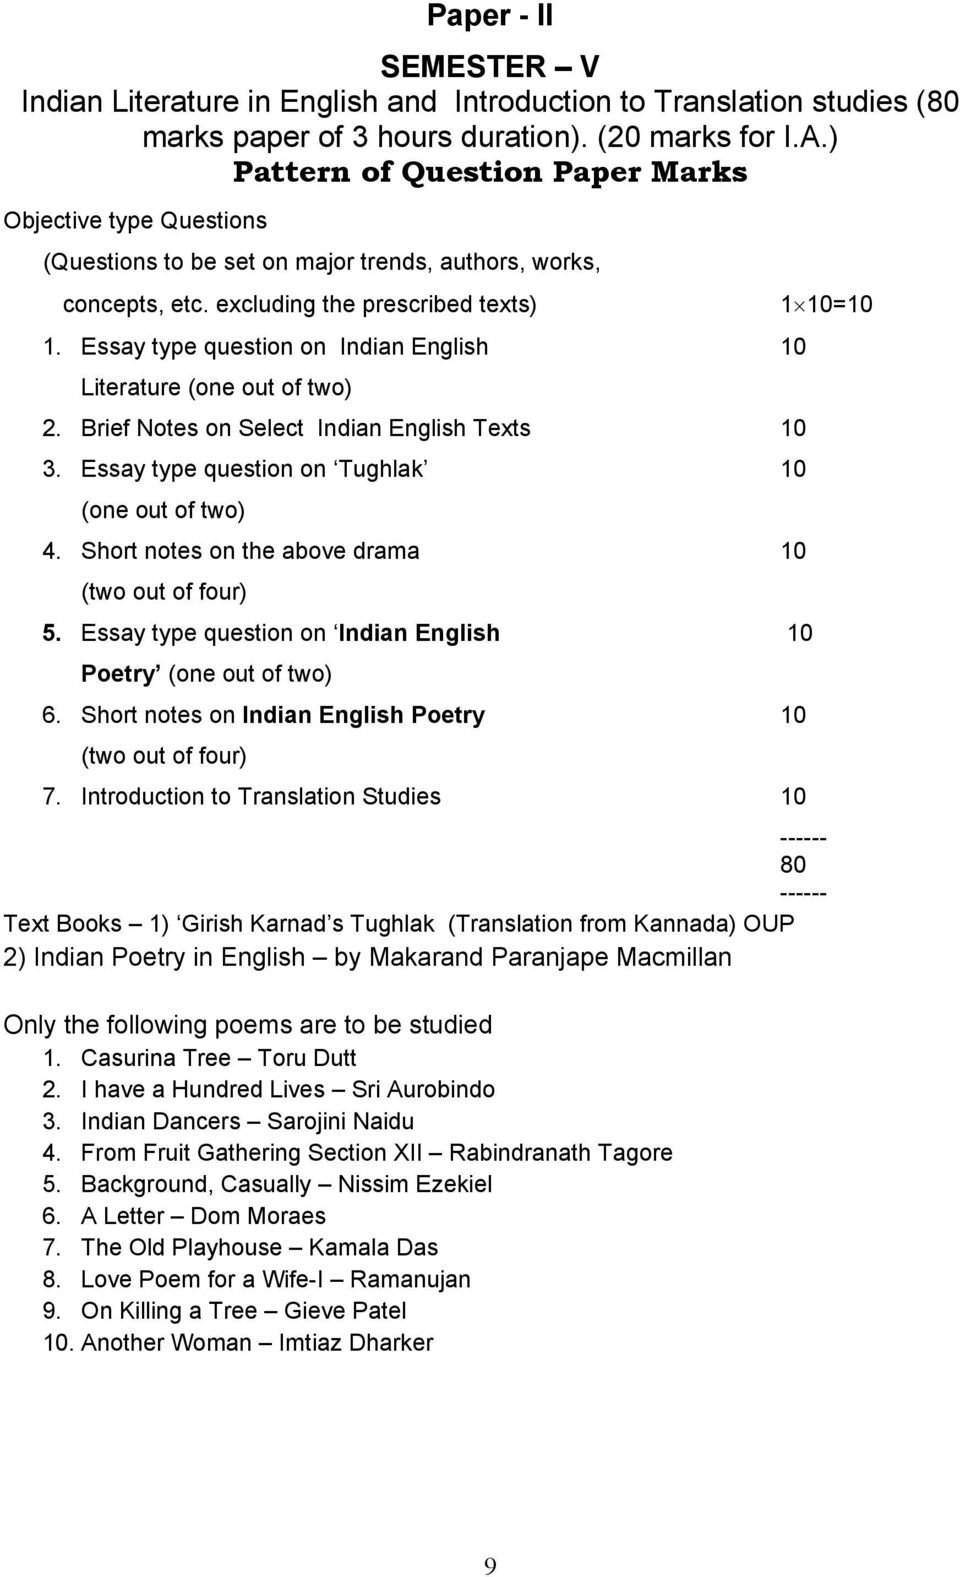 indian english literature notes